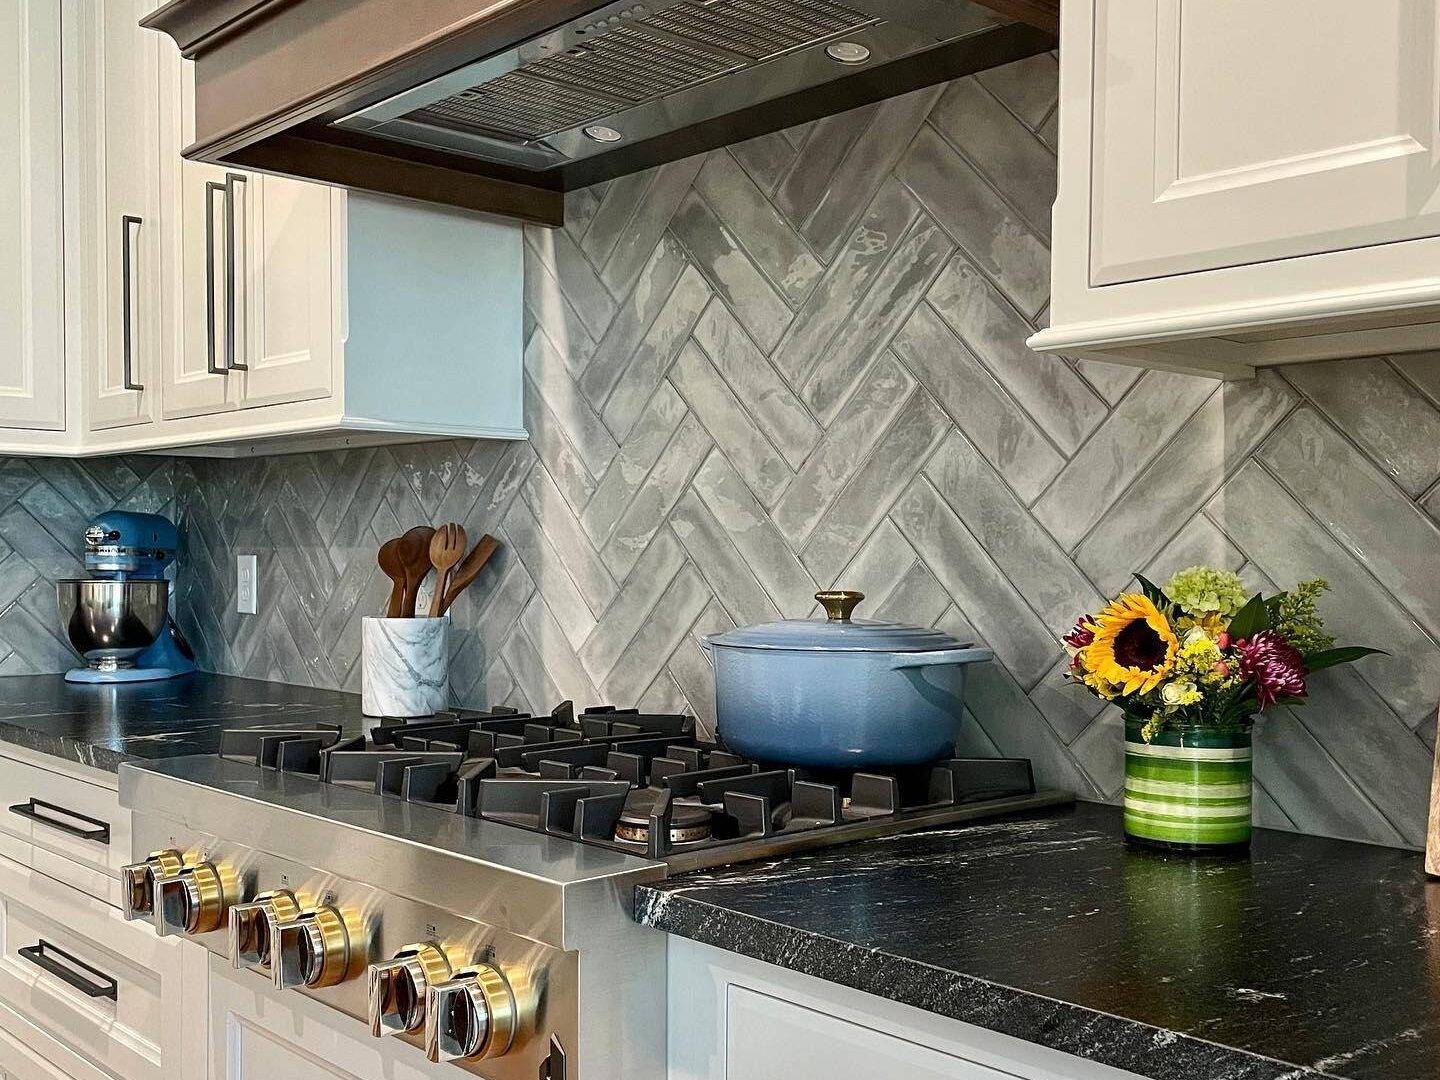 Grey subway tile kitchen backsplash in double herringbone pattern.